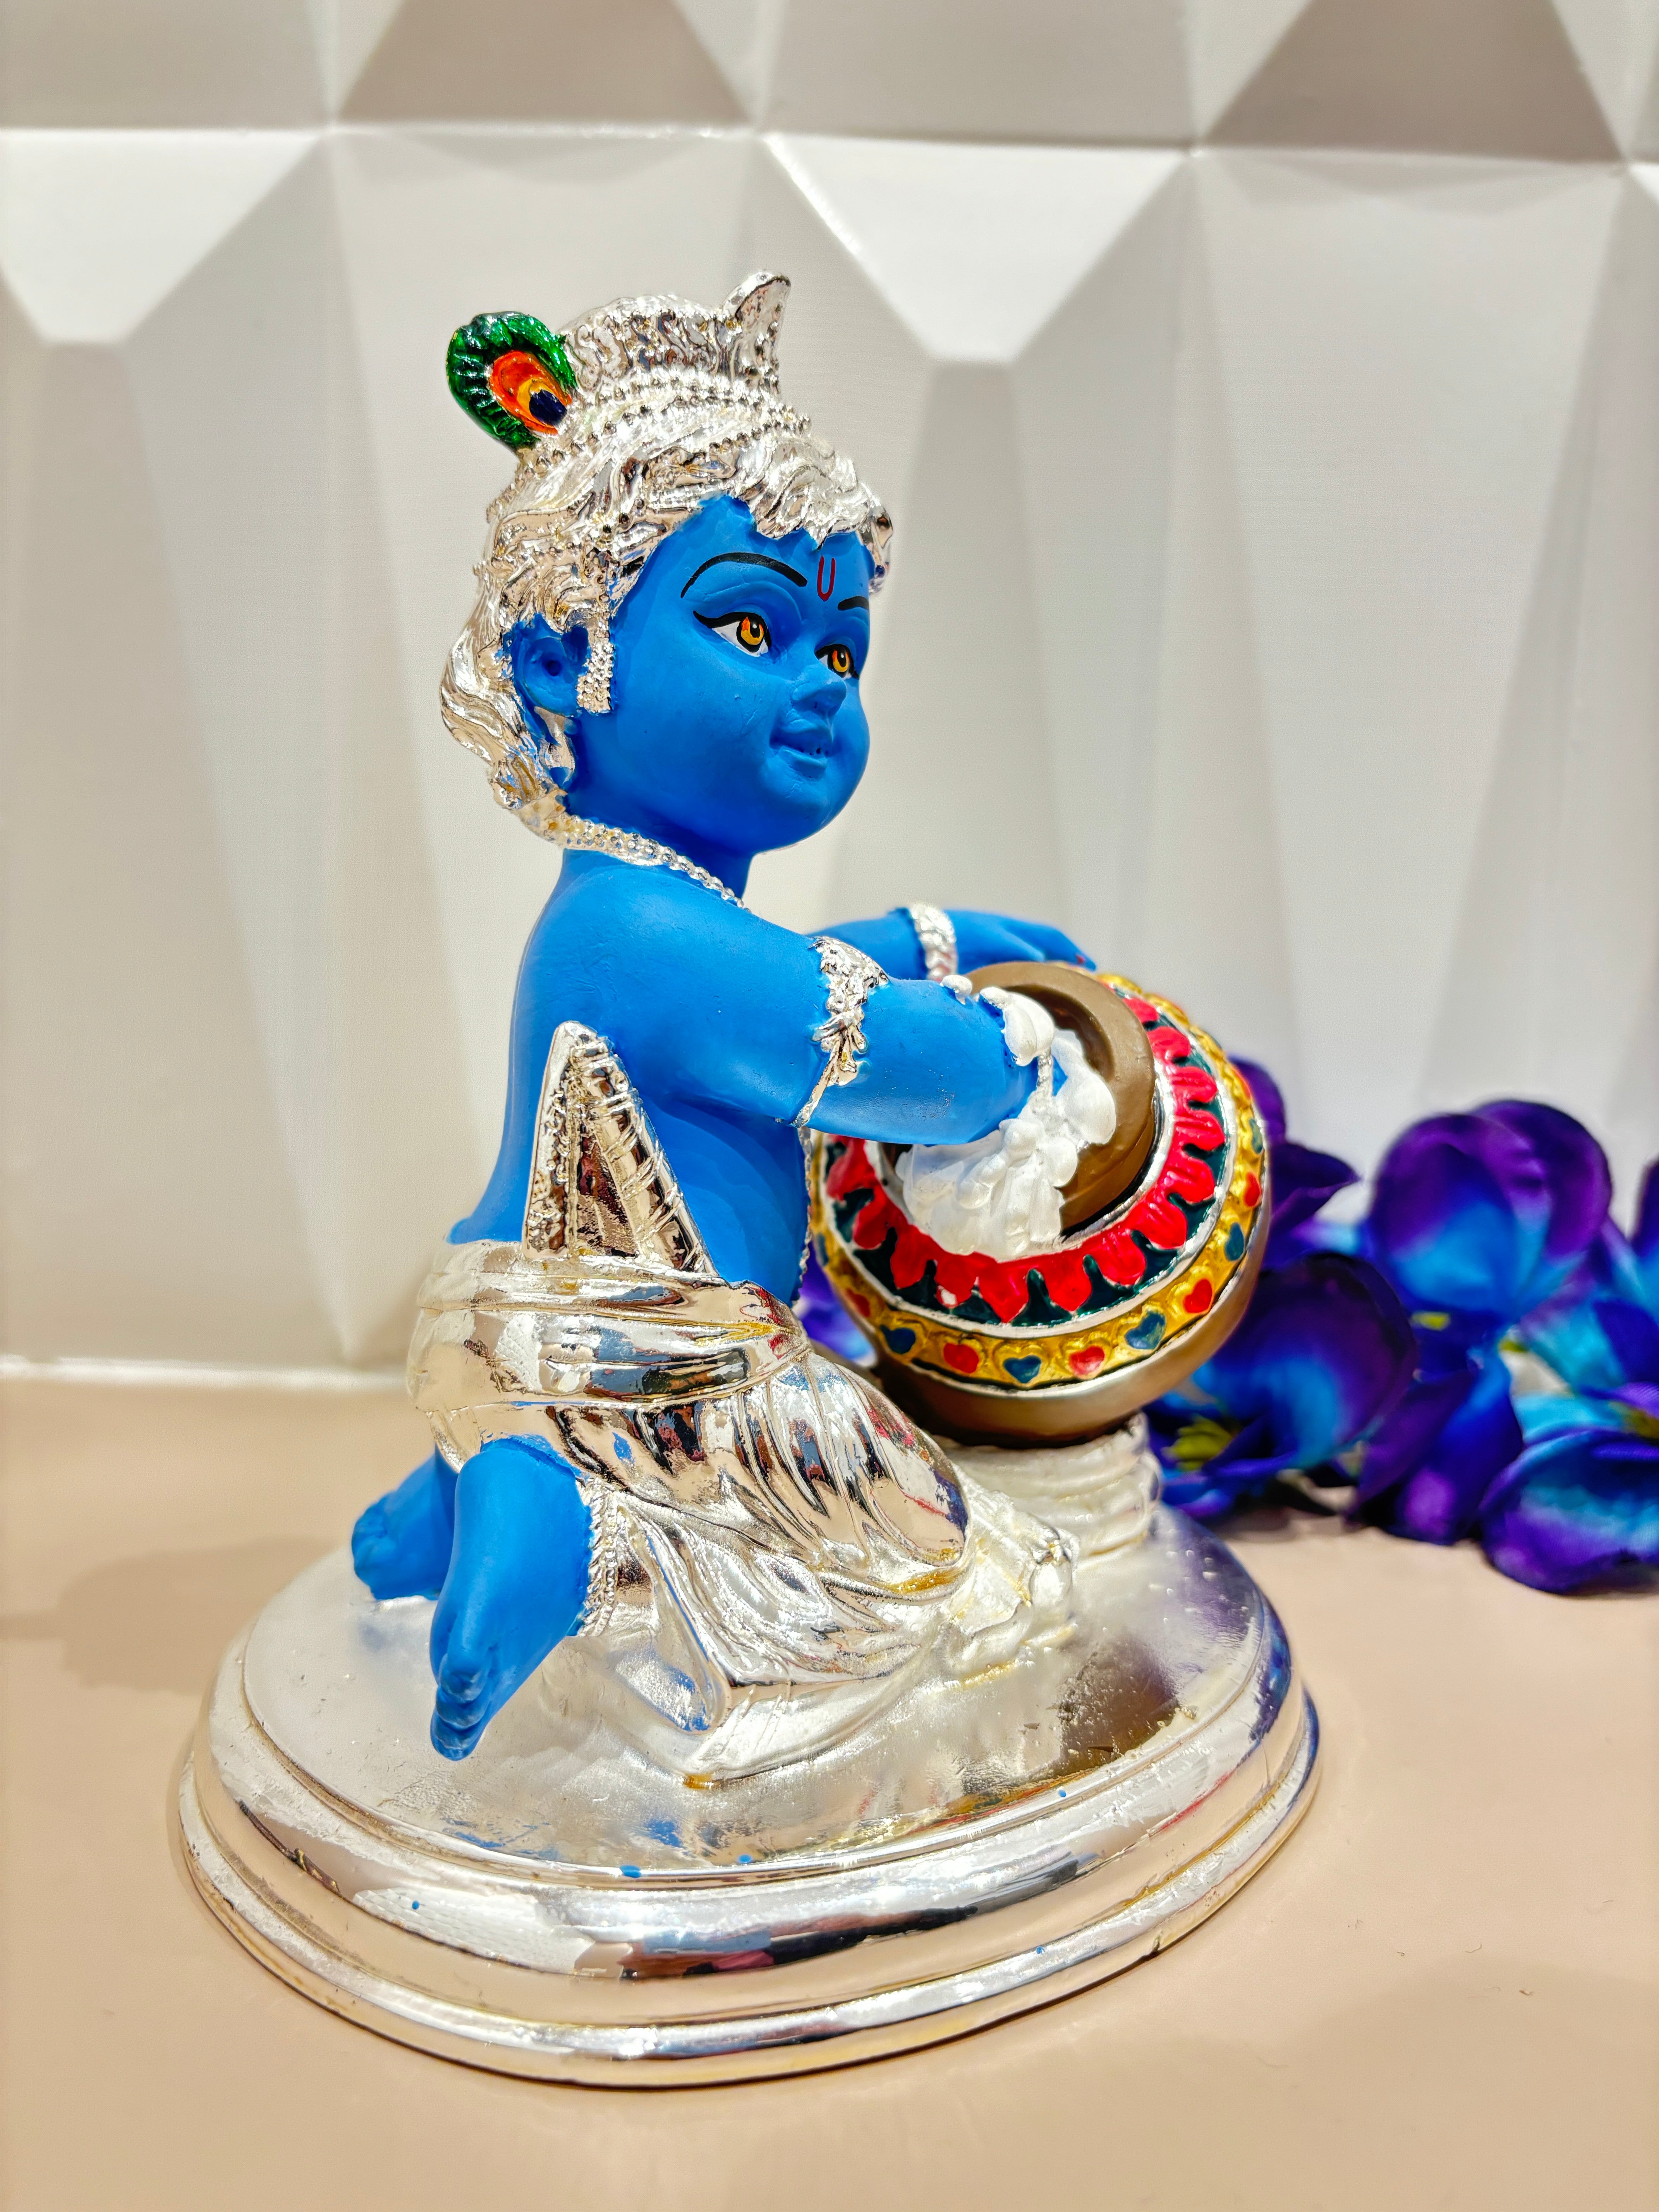 Pure 999 Silver Coated Lord Krishna Idol, Handcrafted Laddu Gopal Murti, Baby Krishna Statue for Home Decor.